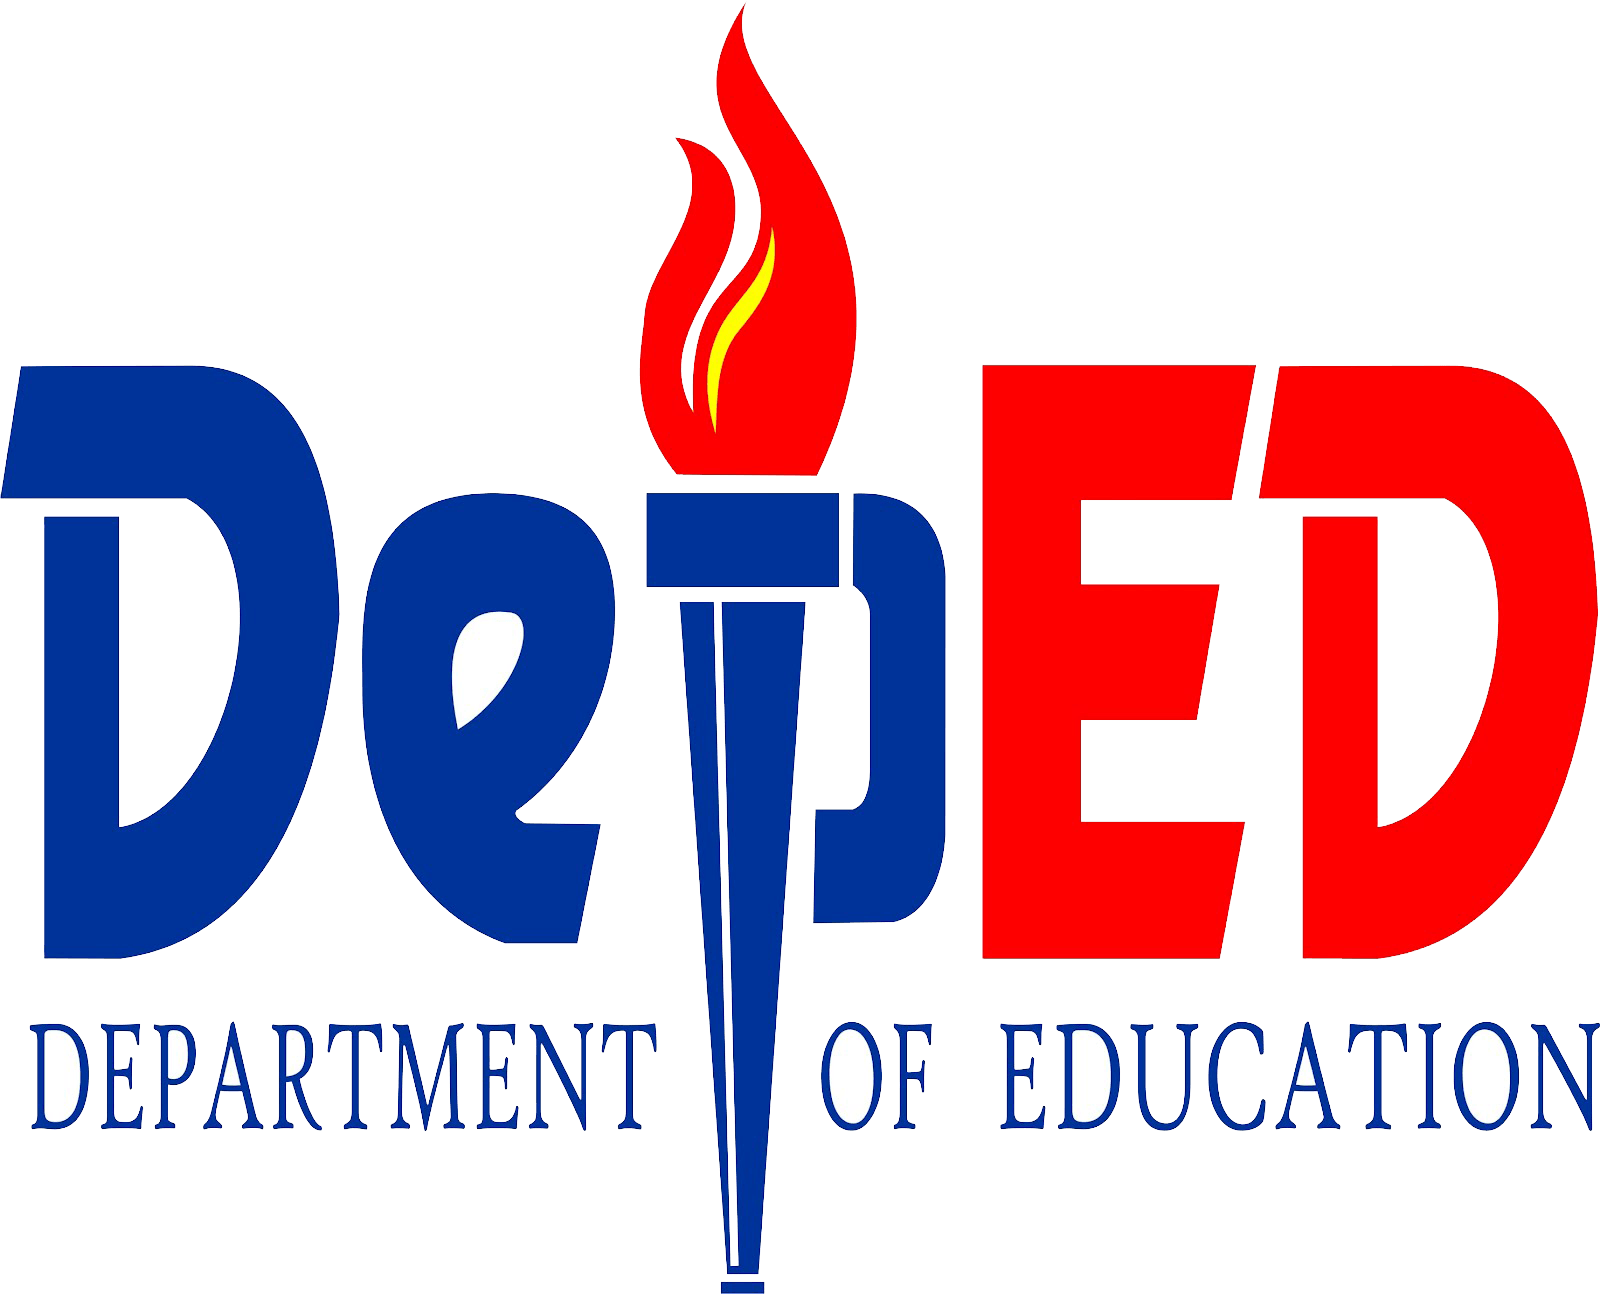 DepEd Logo - SY 2019 2020: DepED Teachers New Uniform Design